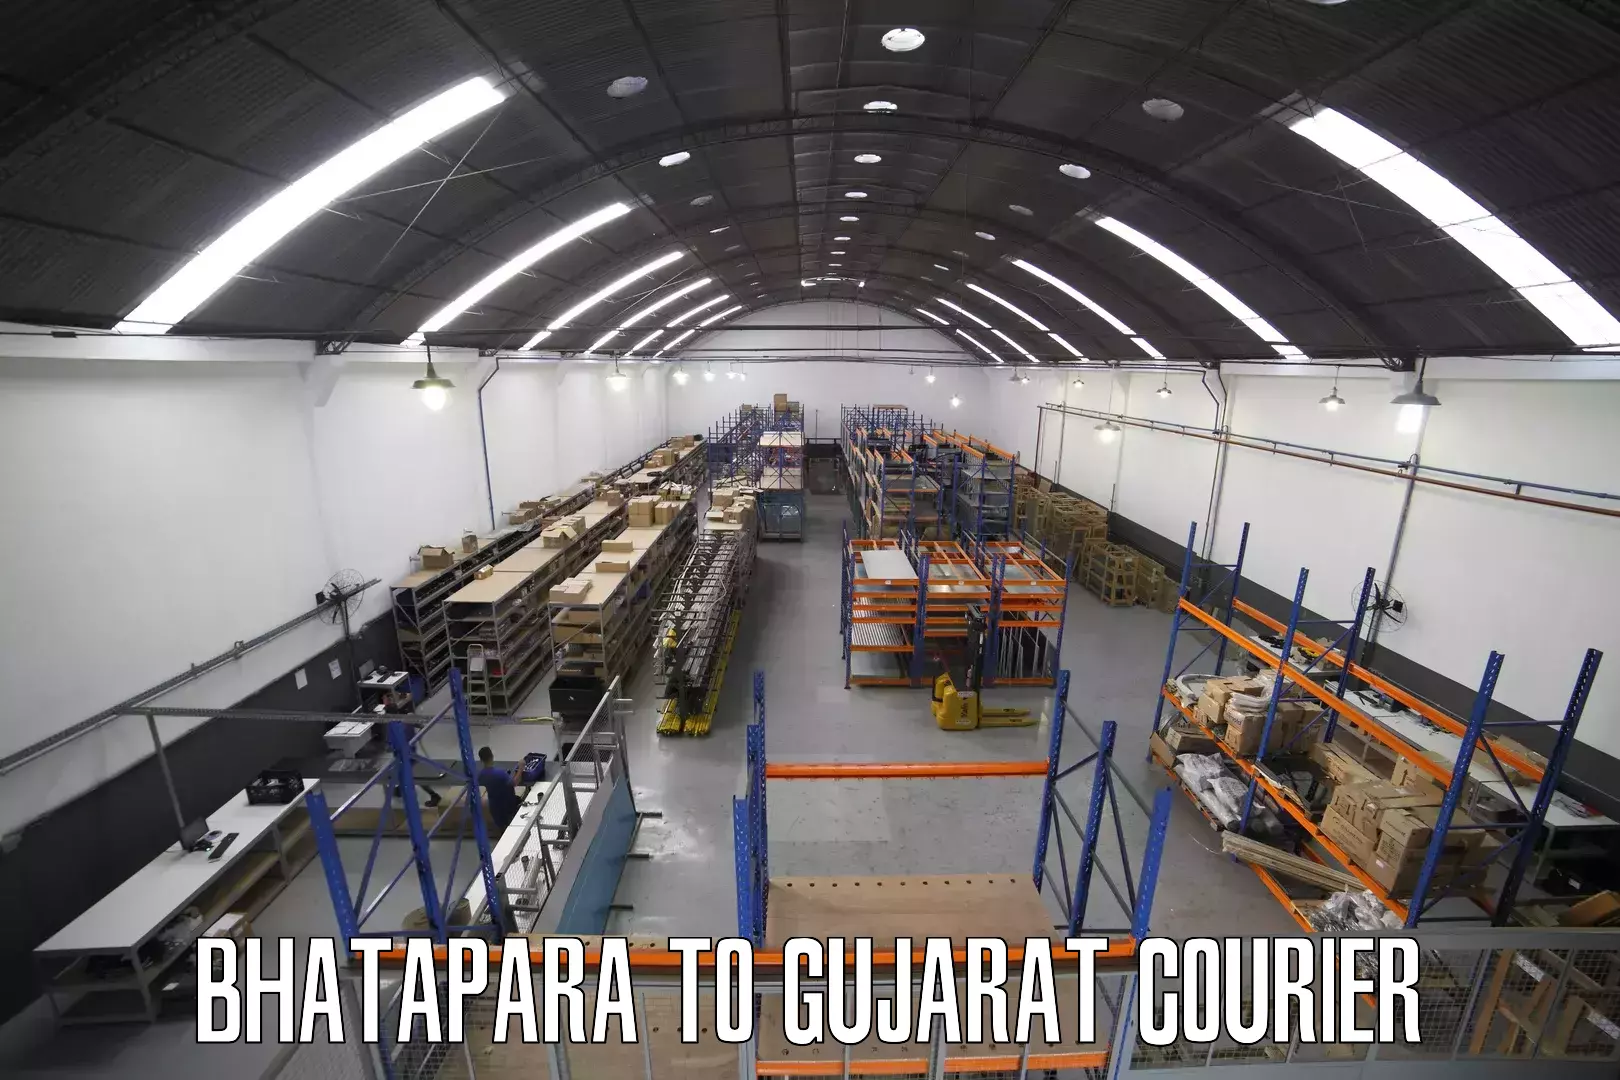 Courier membership Bhatapara to Katodara